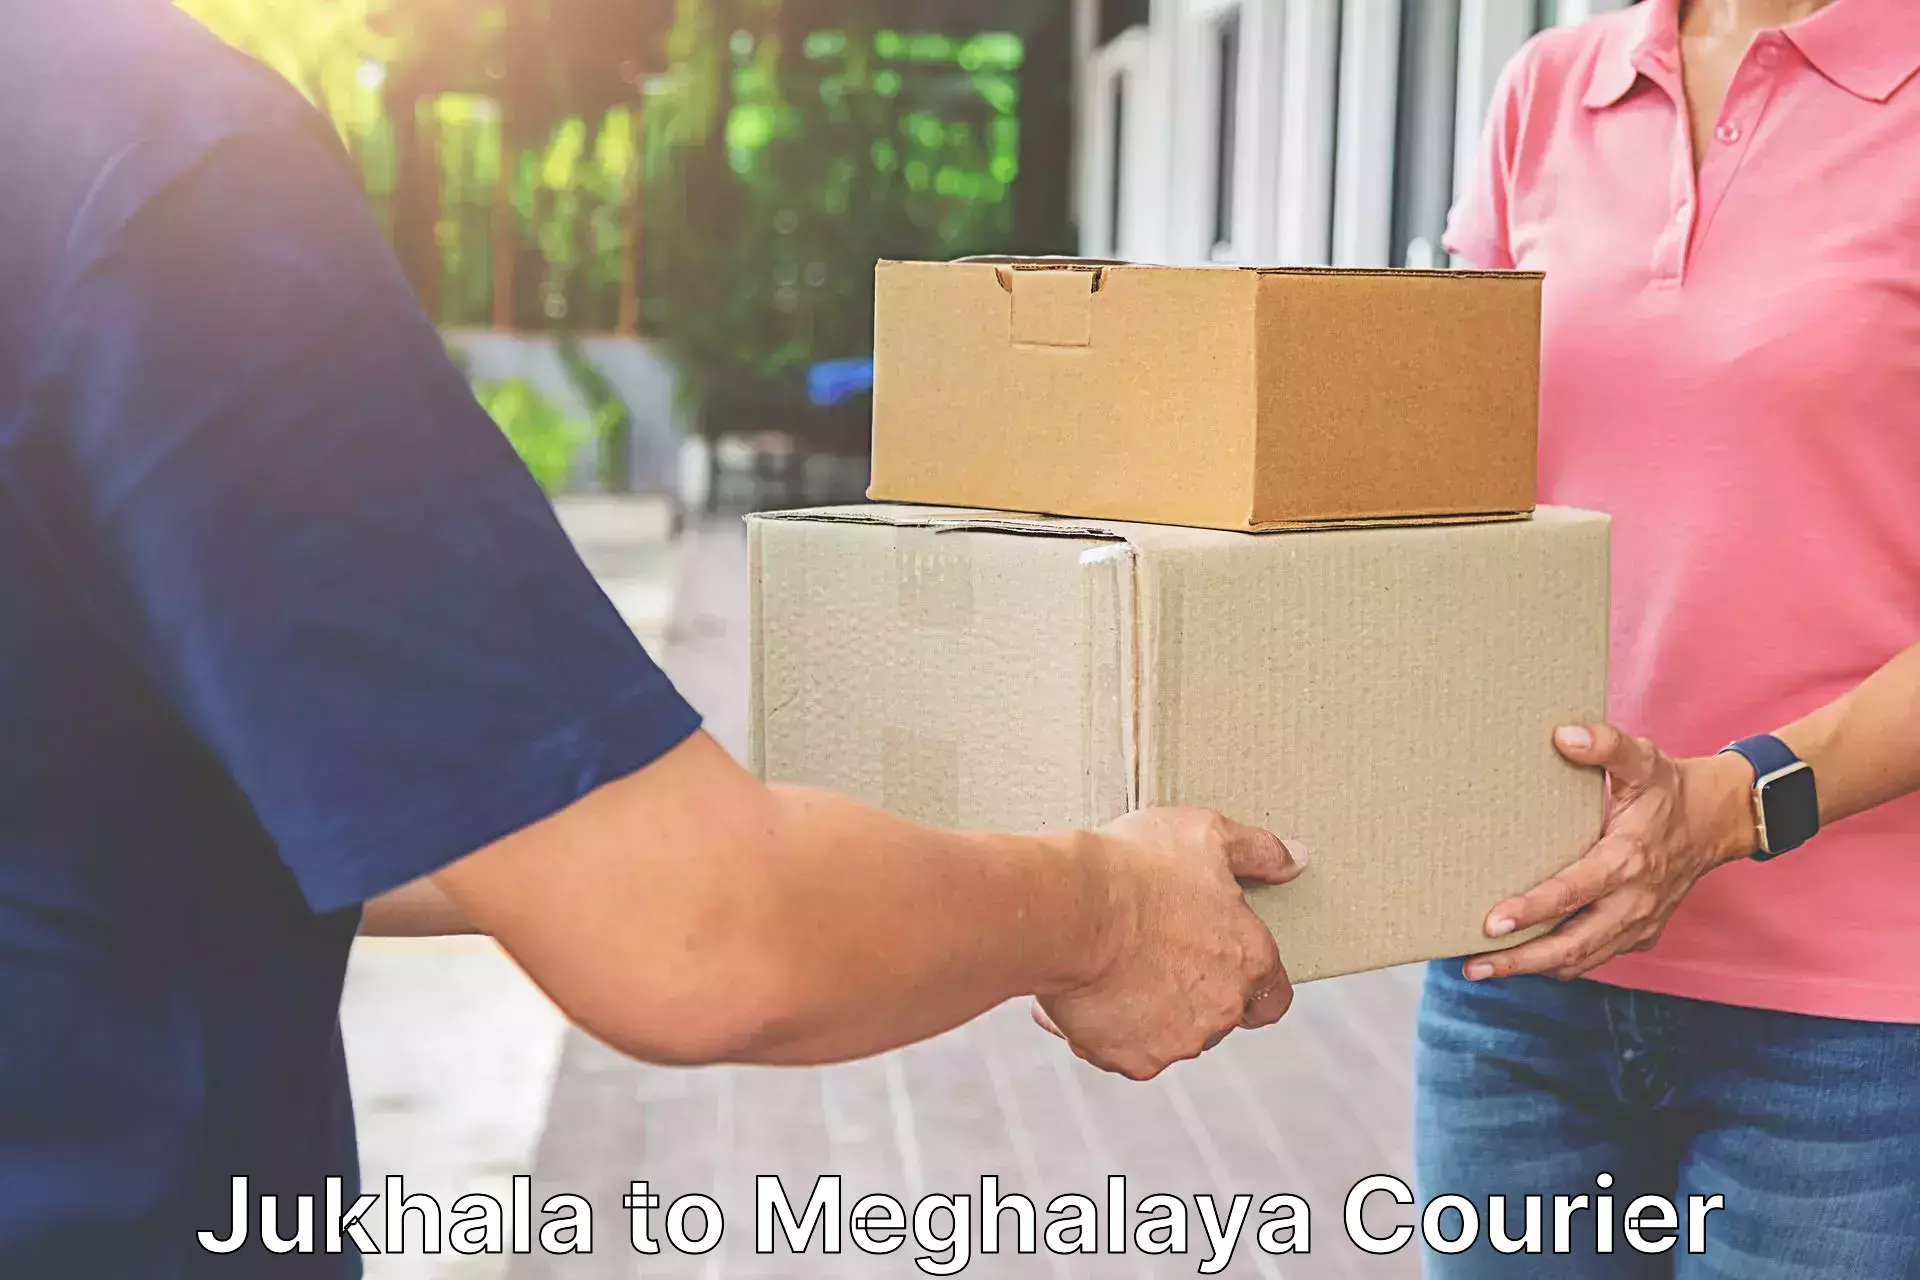 Speedy delivery service Jukhala to Shillong